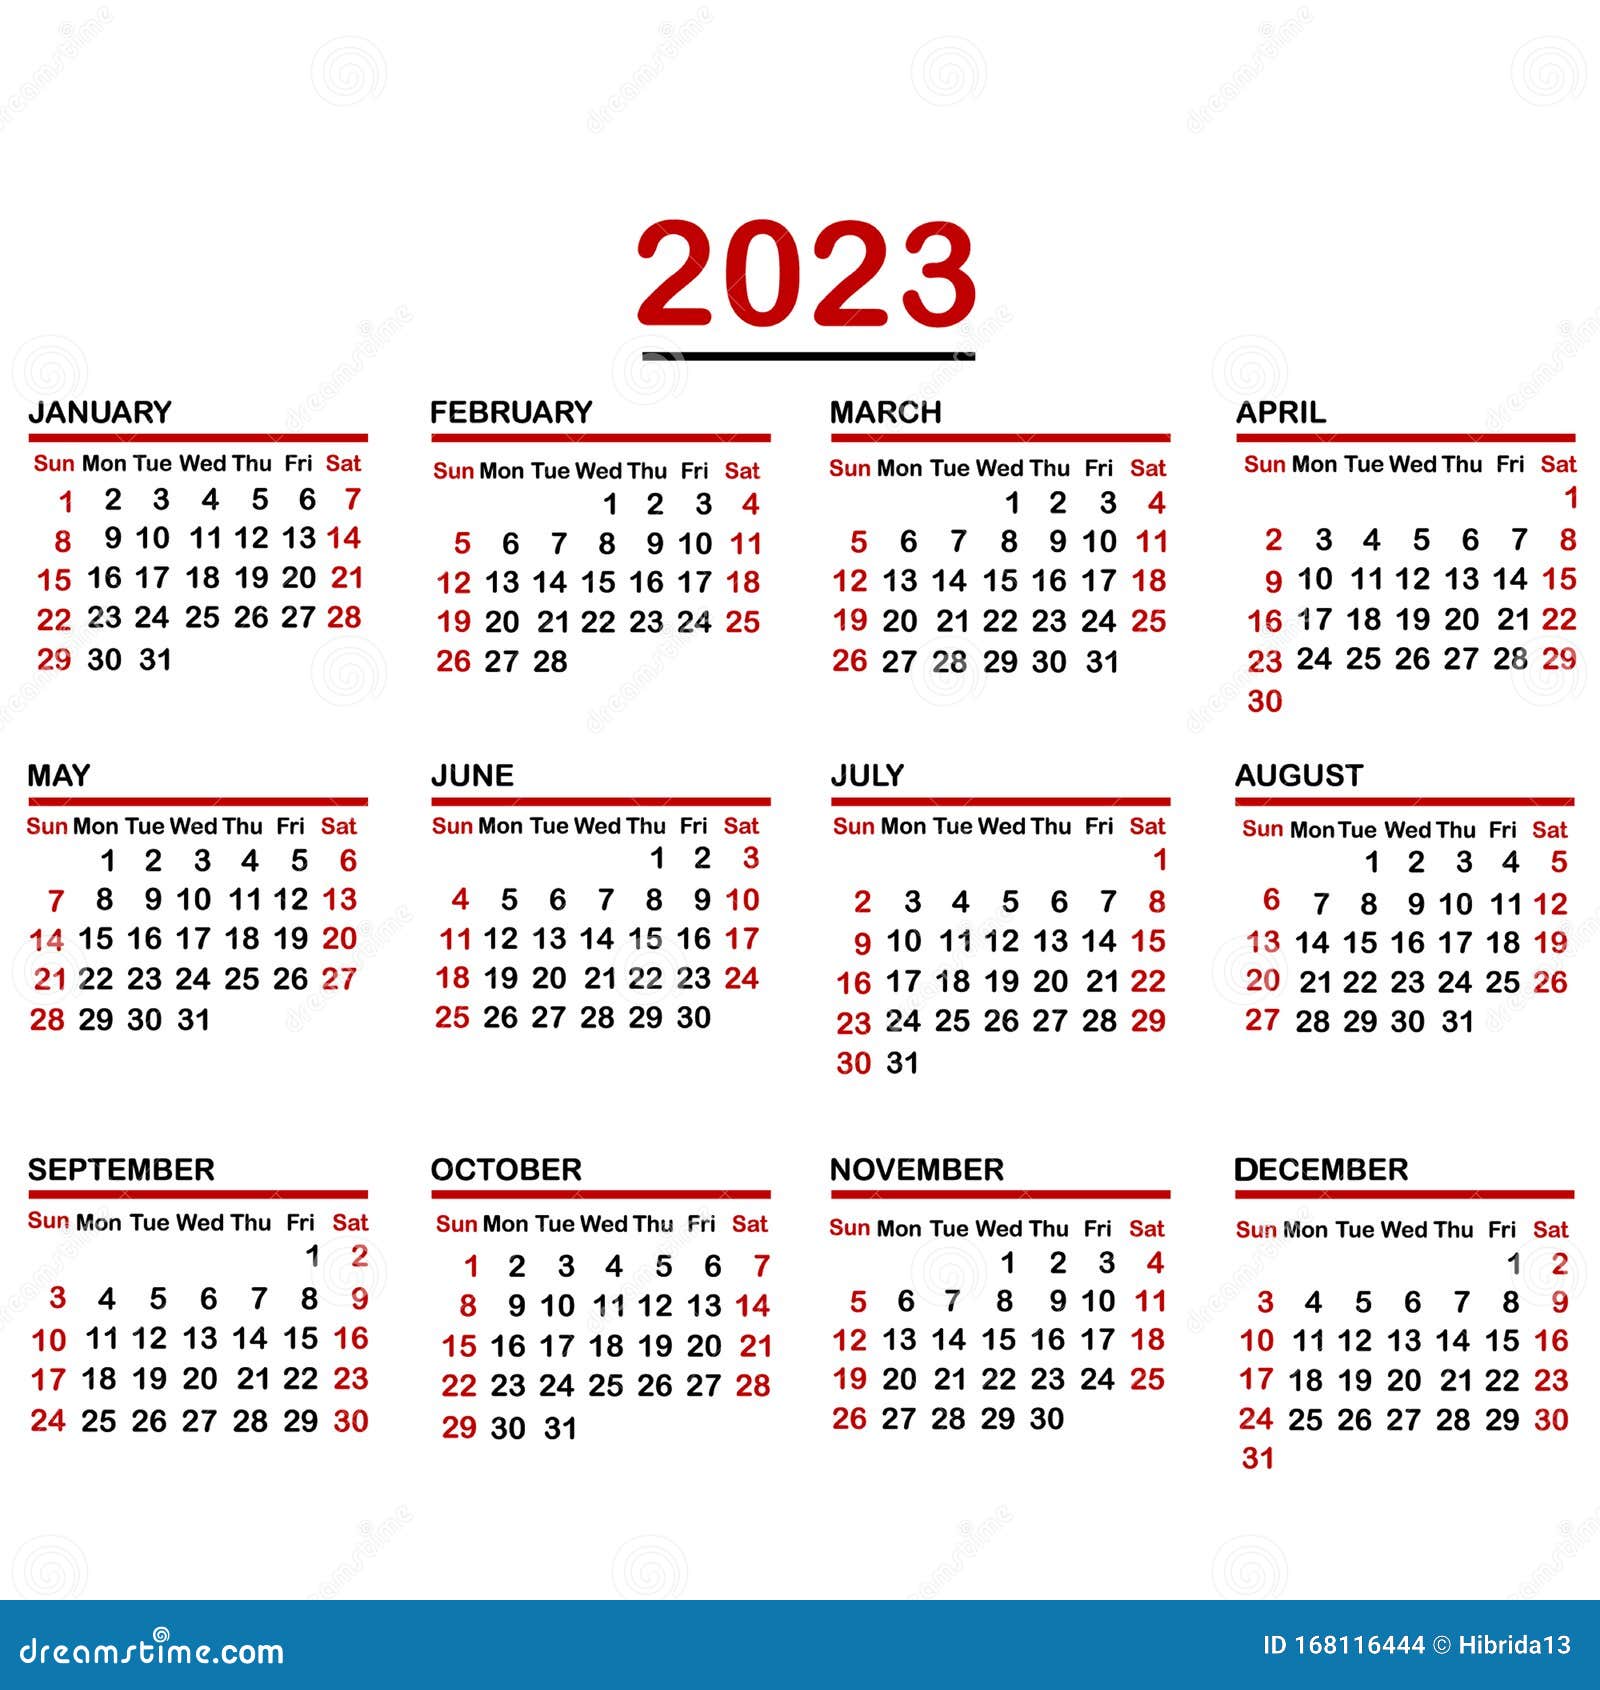 calendar-date-2023-printable-printable-templates-free